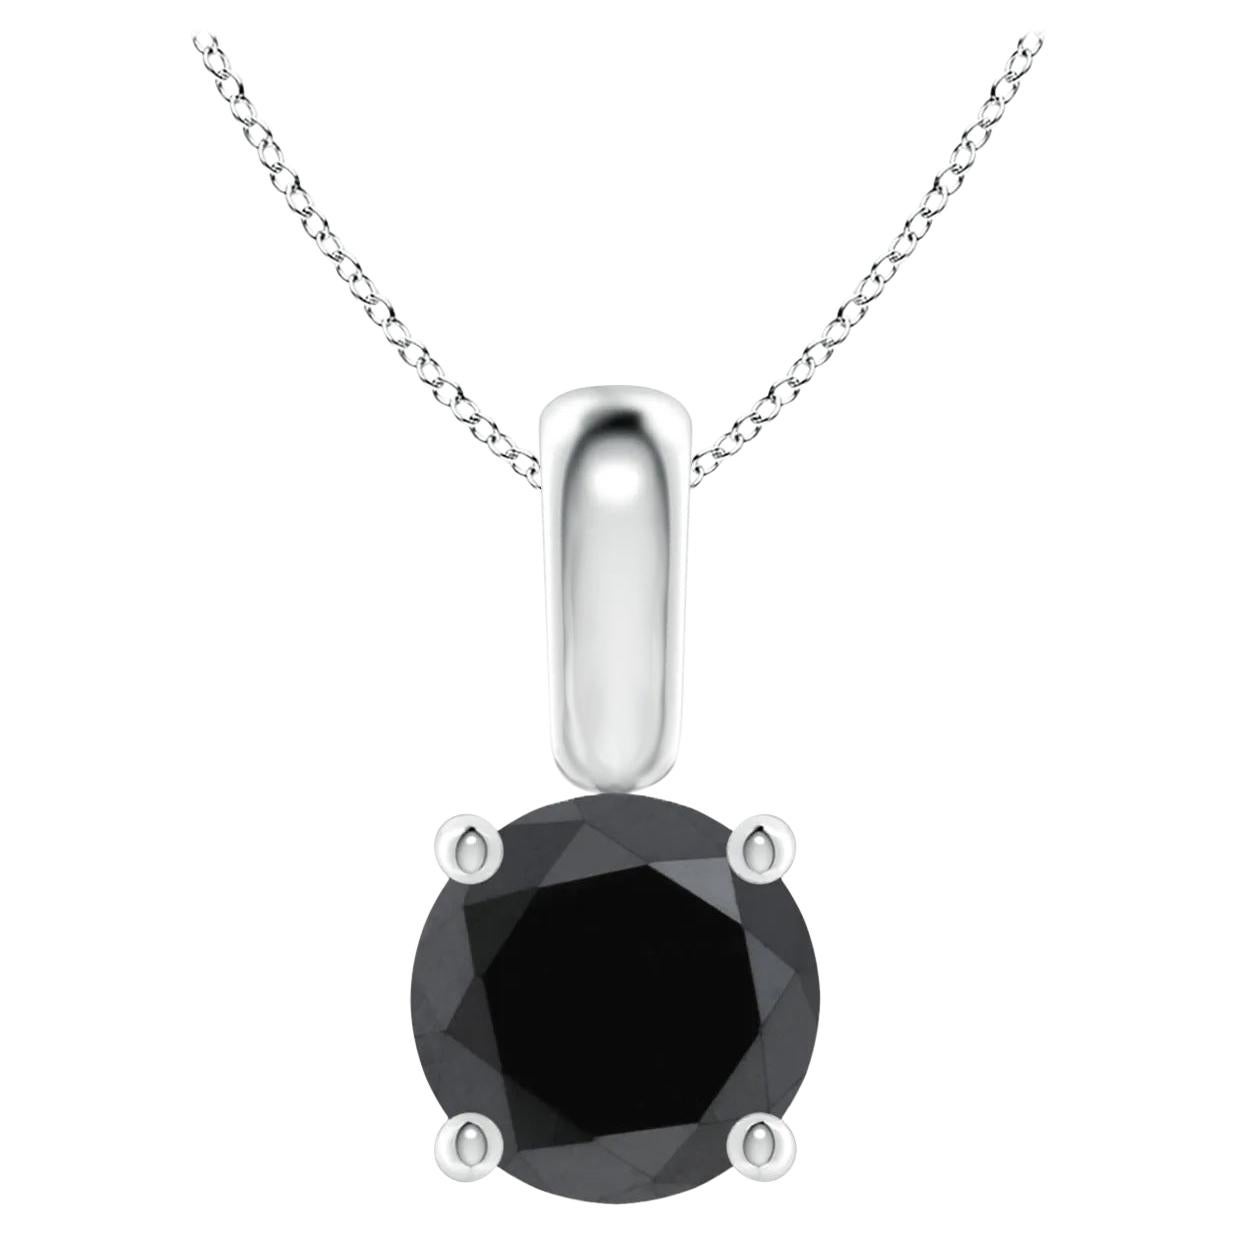 1.44 Carat Round Black Diamond Solitaire Pendant Necklace in 14K White Gold